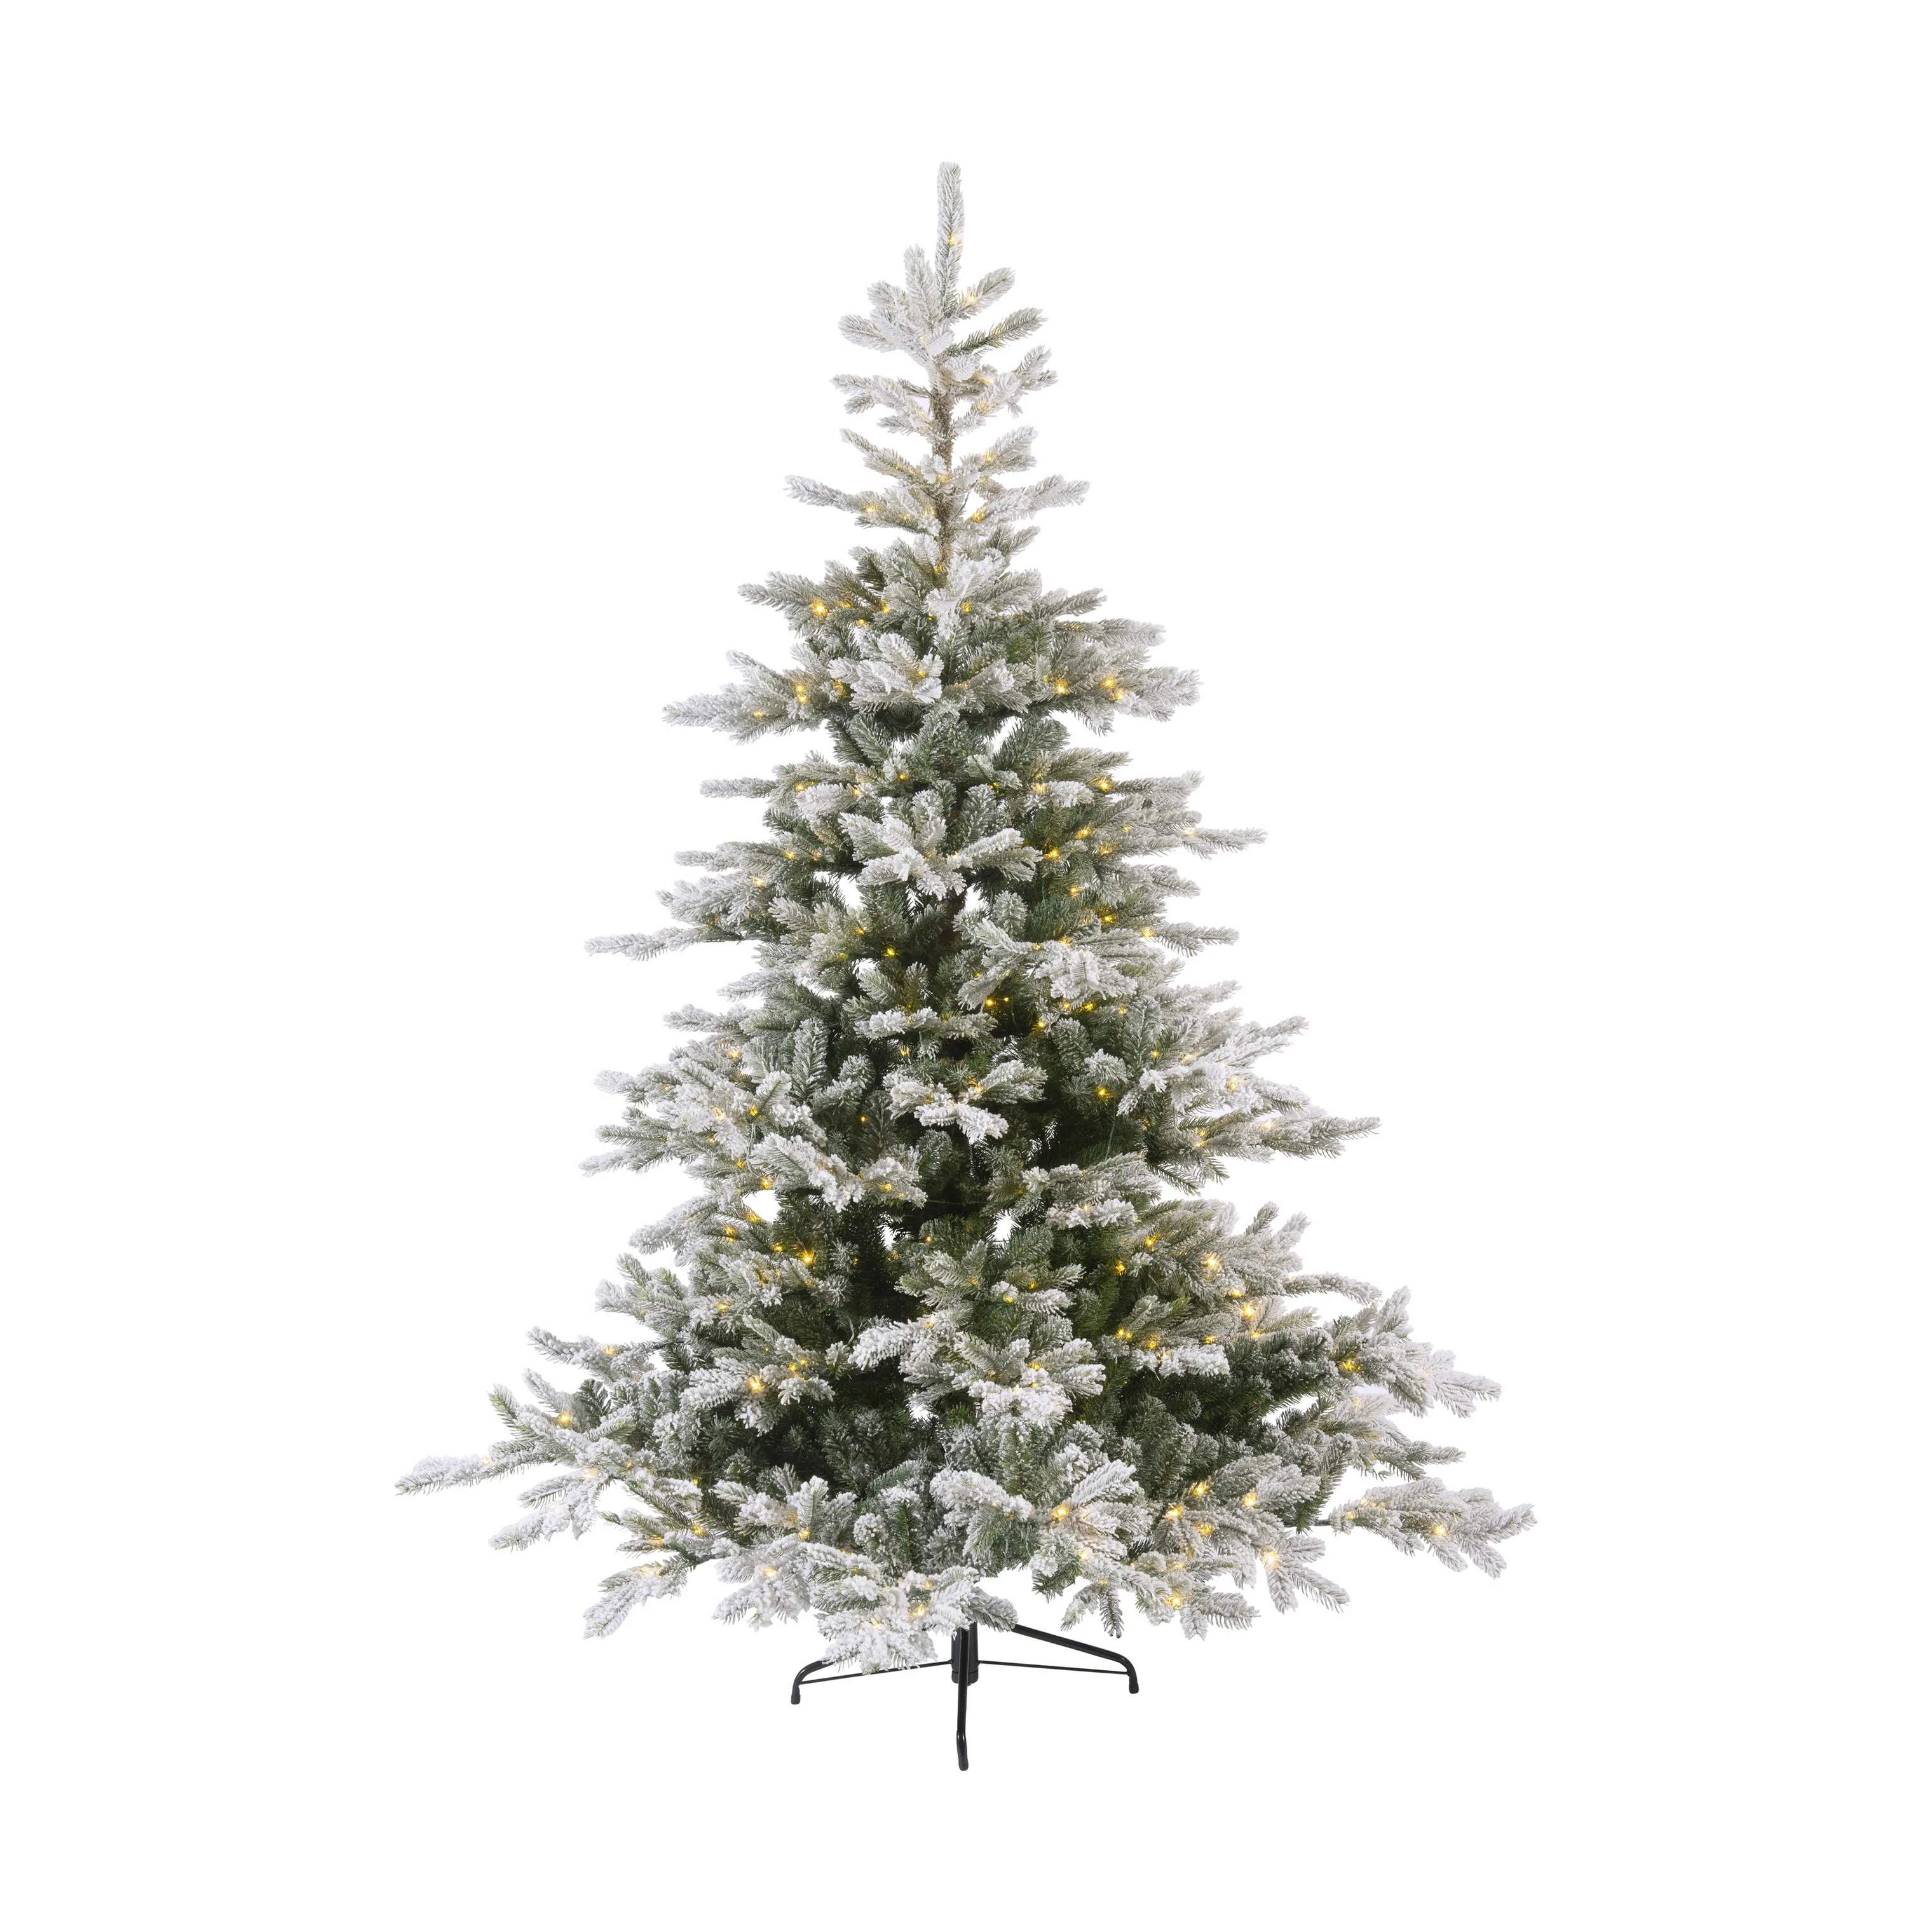 Casa Christmas juletræer Grandis Fir Snowy Kunstigt Juletræ m. LED-lys